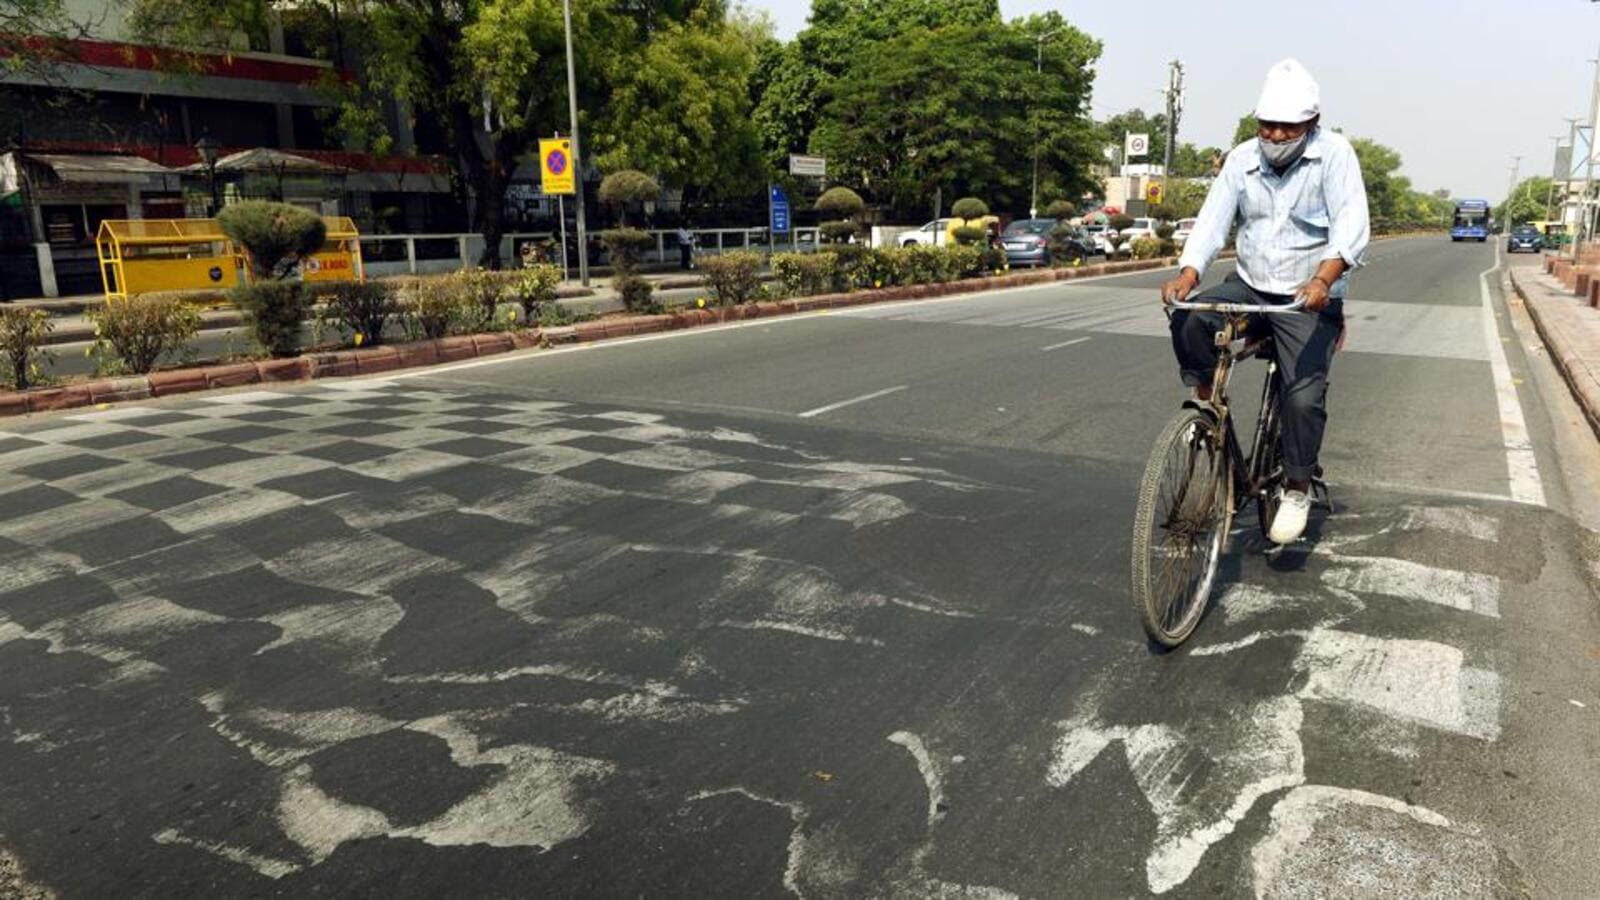 At 44.2°C, Delhi sizzles on year’s hottest day yet Latest News Delhi